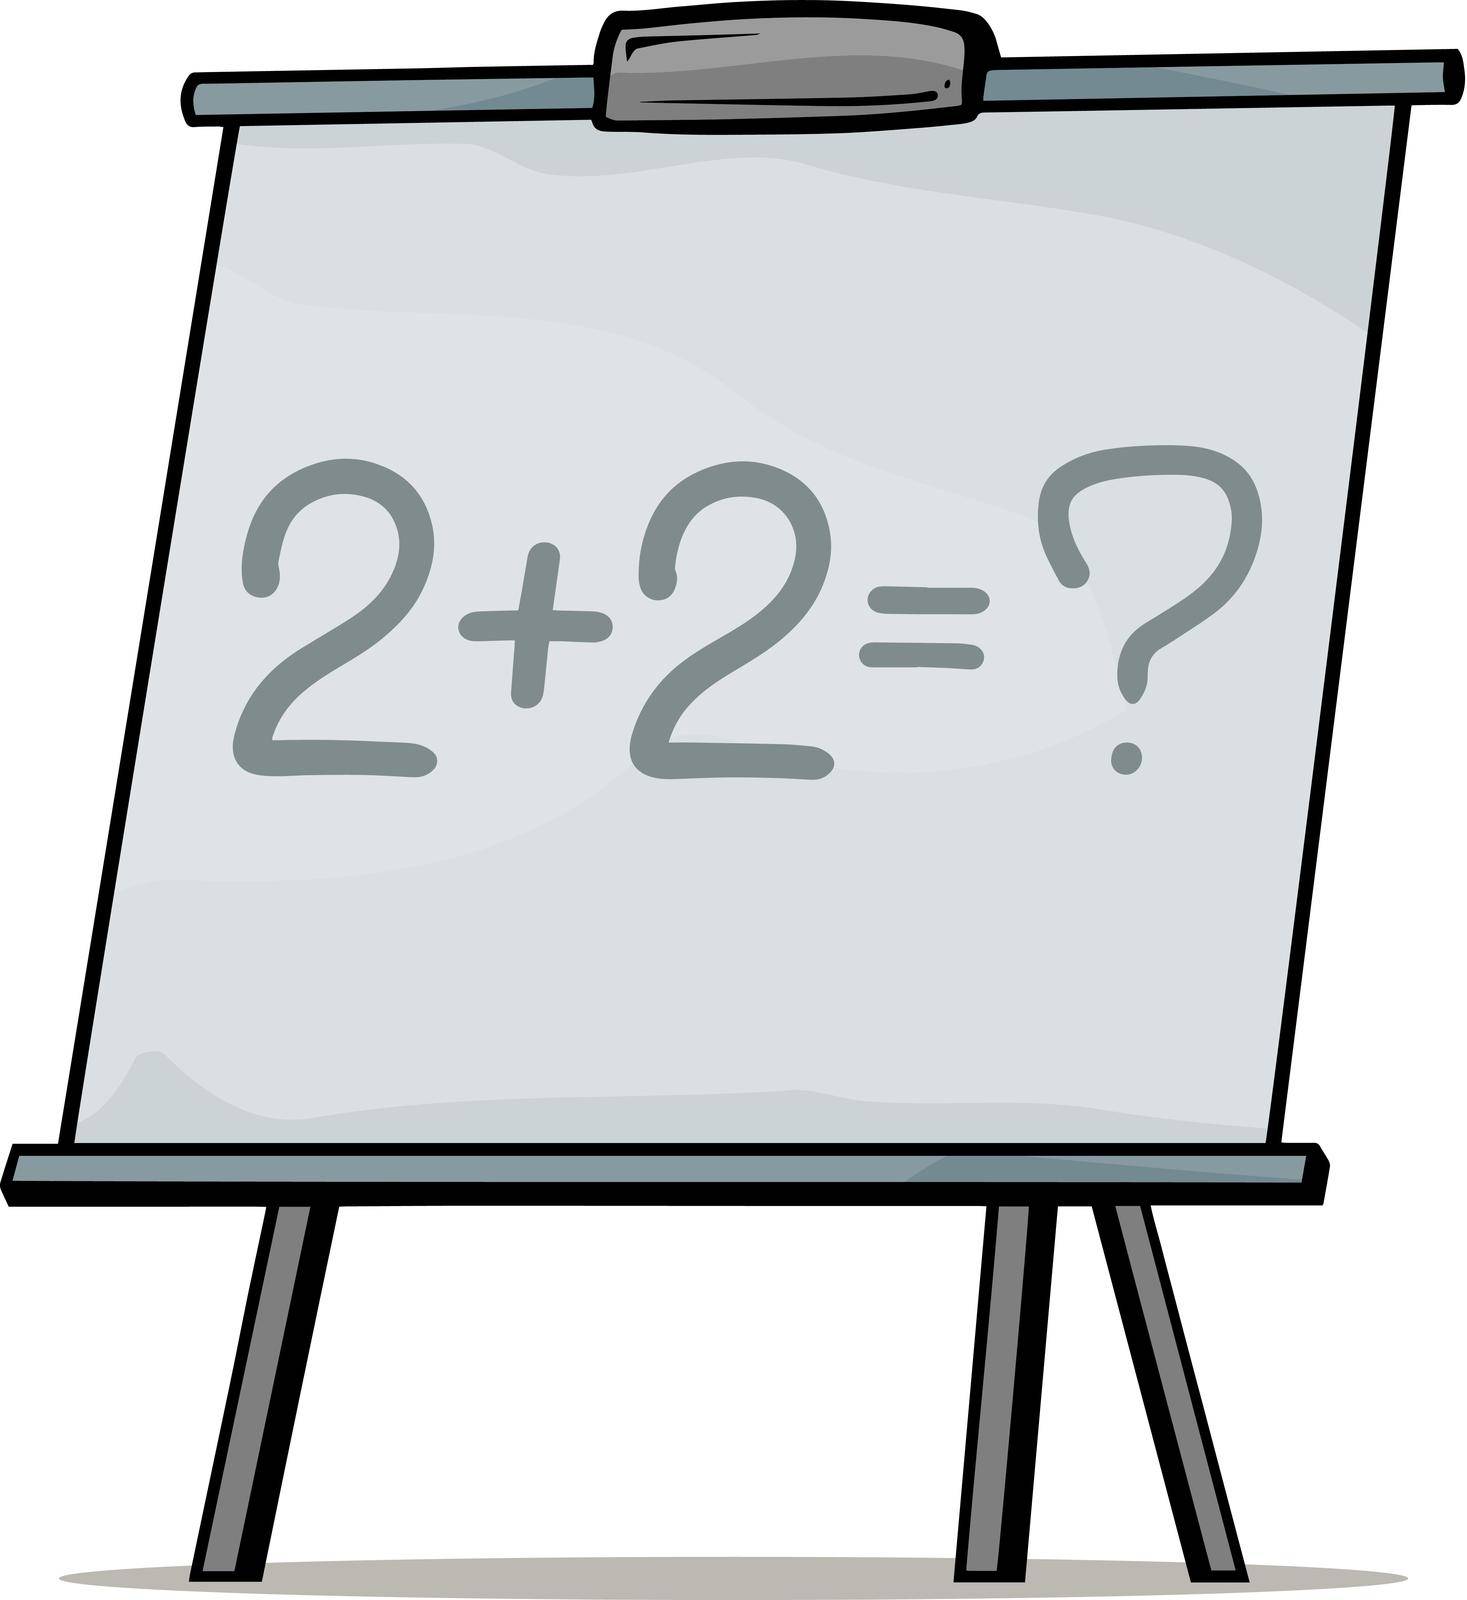 Cartoon school whiteboard for mathematic by GB_Art